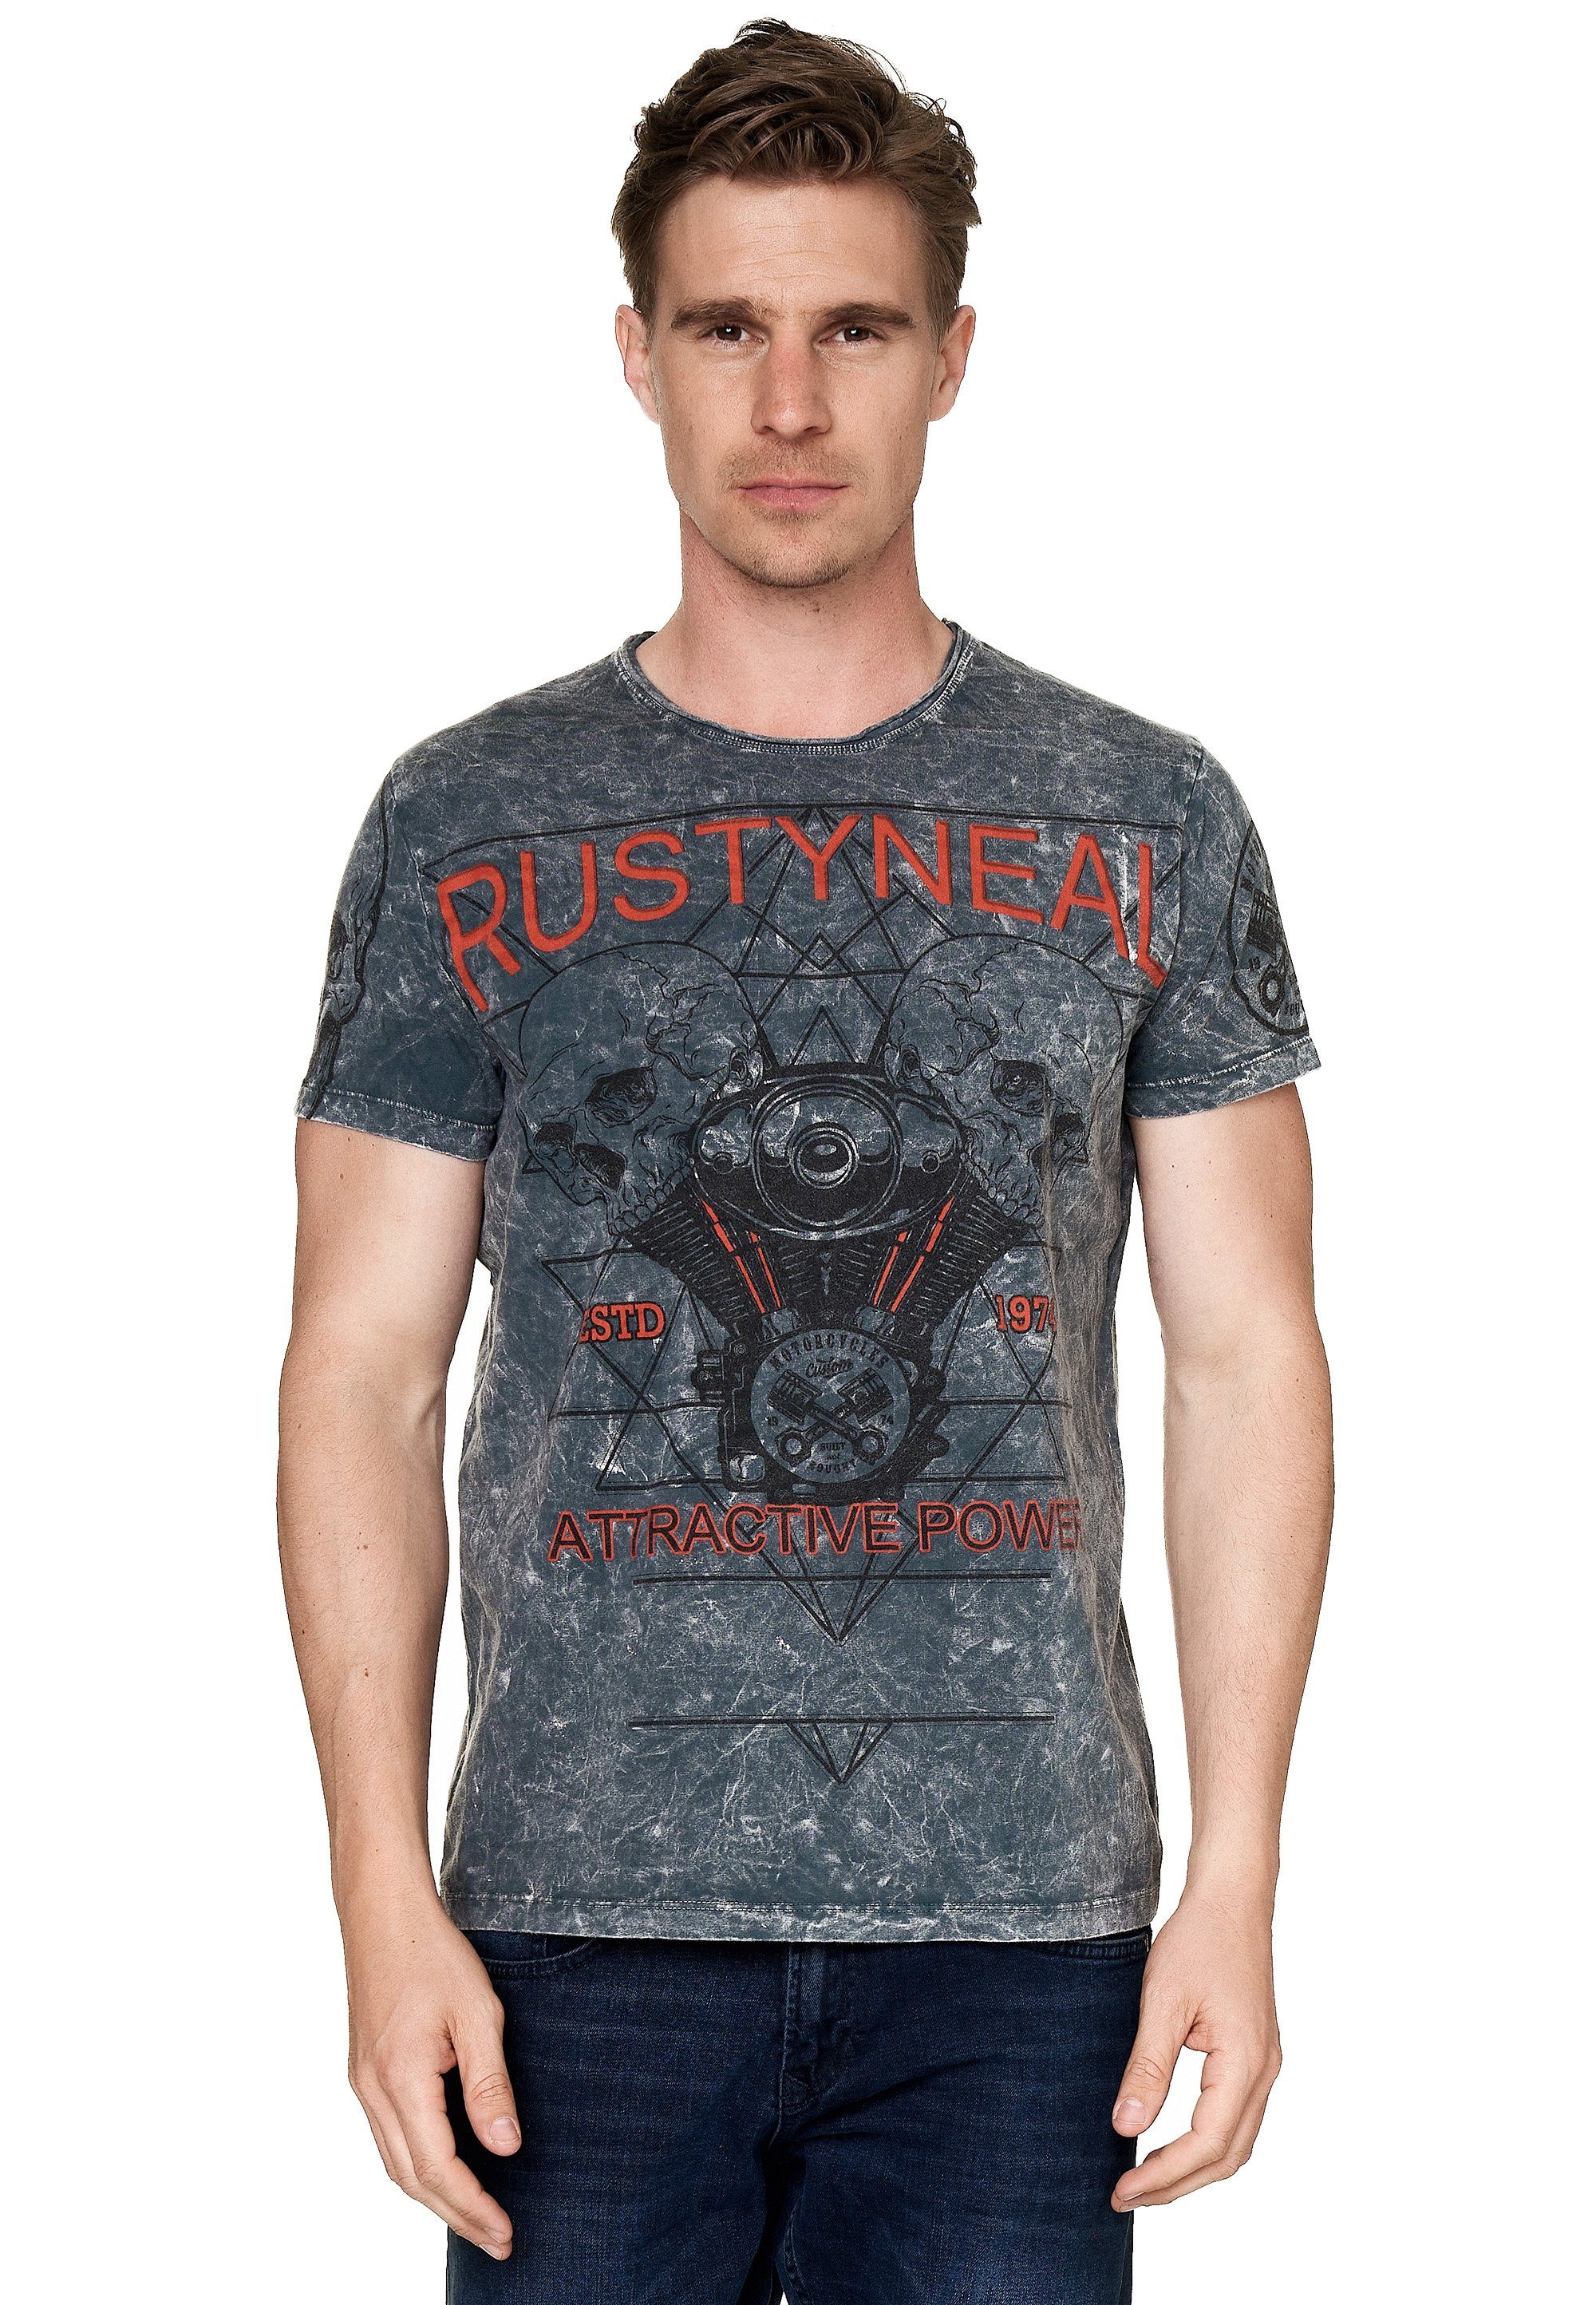 Rusty Neal T-Shirt mit coolem Frontprint anthrazit